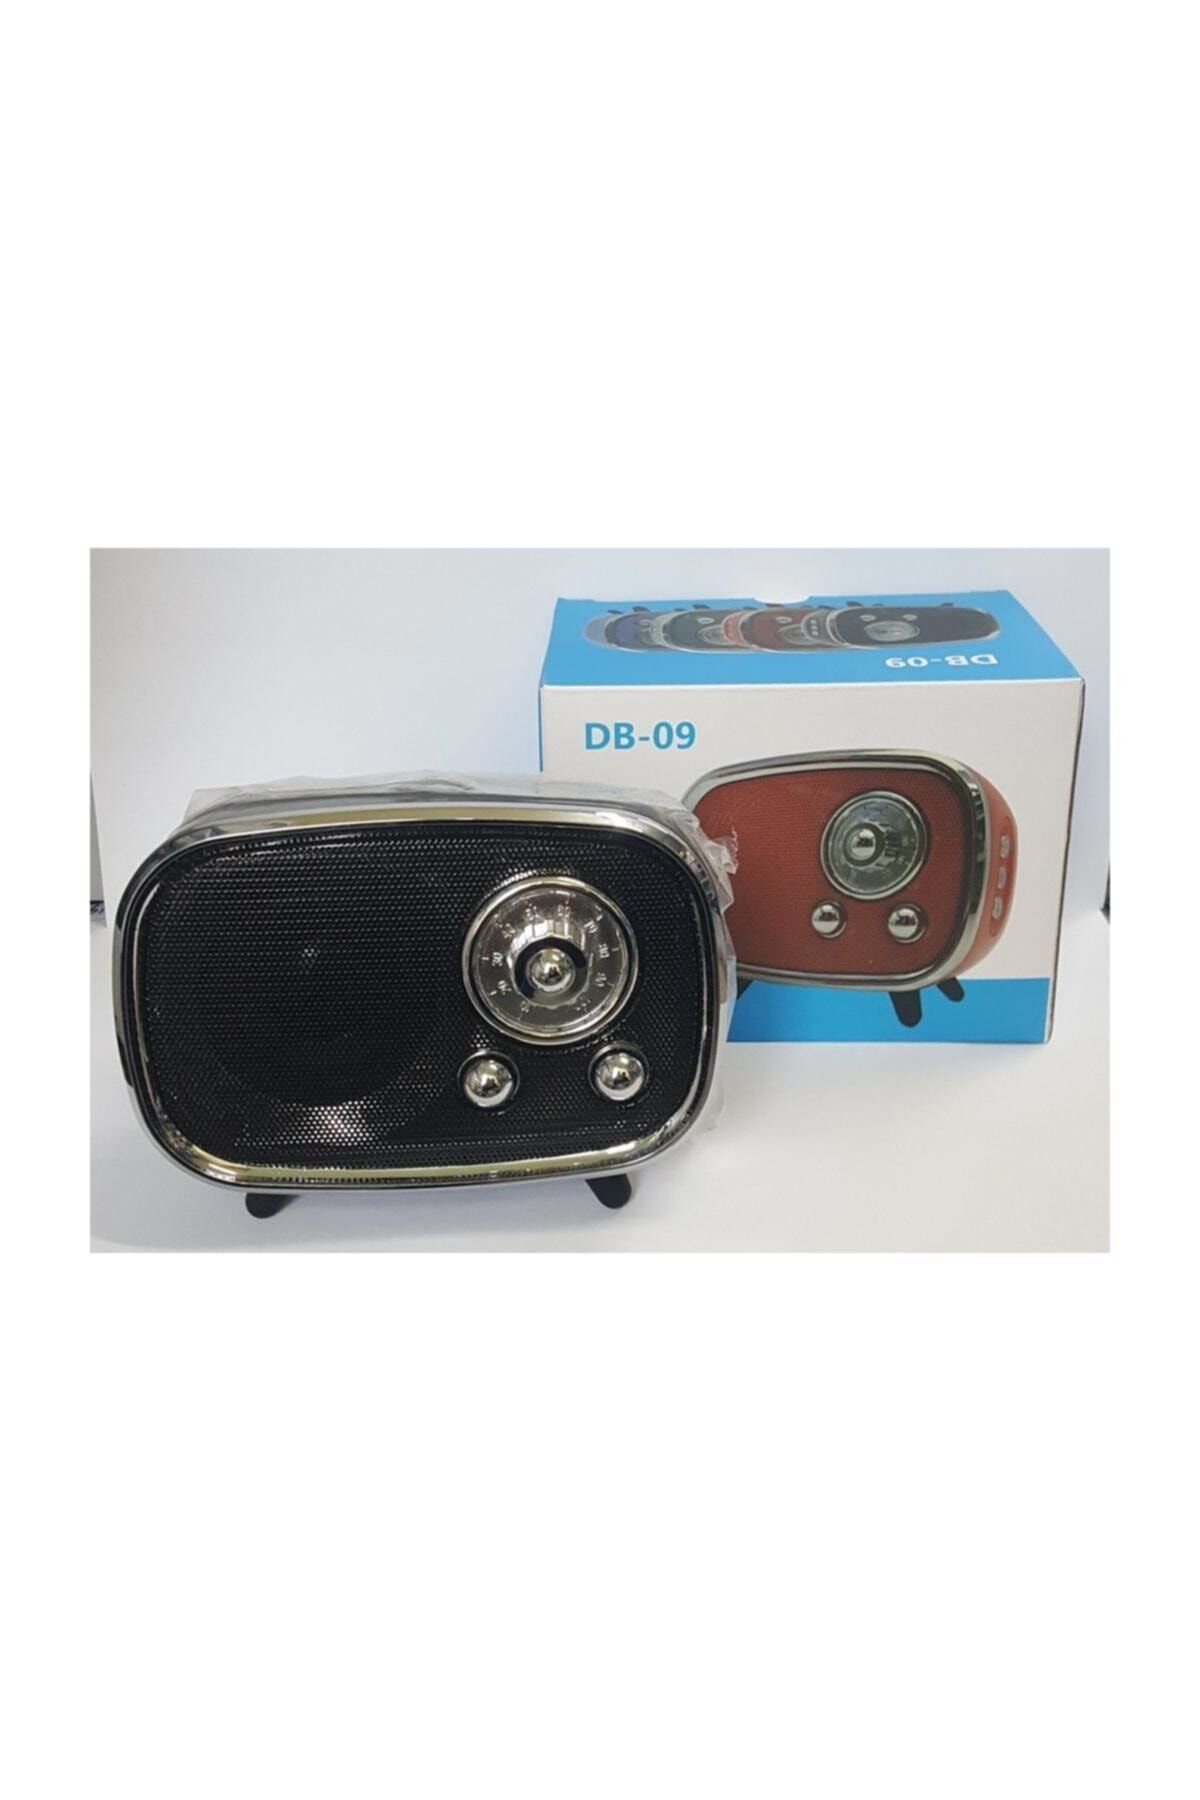 Tastech Db-09 Mini Retro Style Bluetooth Hoparlör Fm Radyo Sd Kart Ve Usb Girişli Speaker Siyah